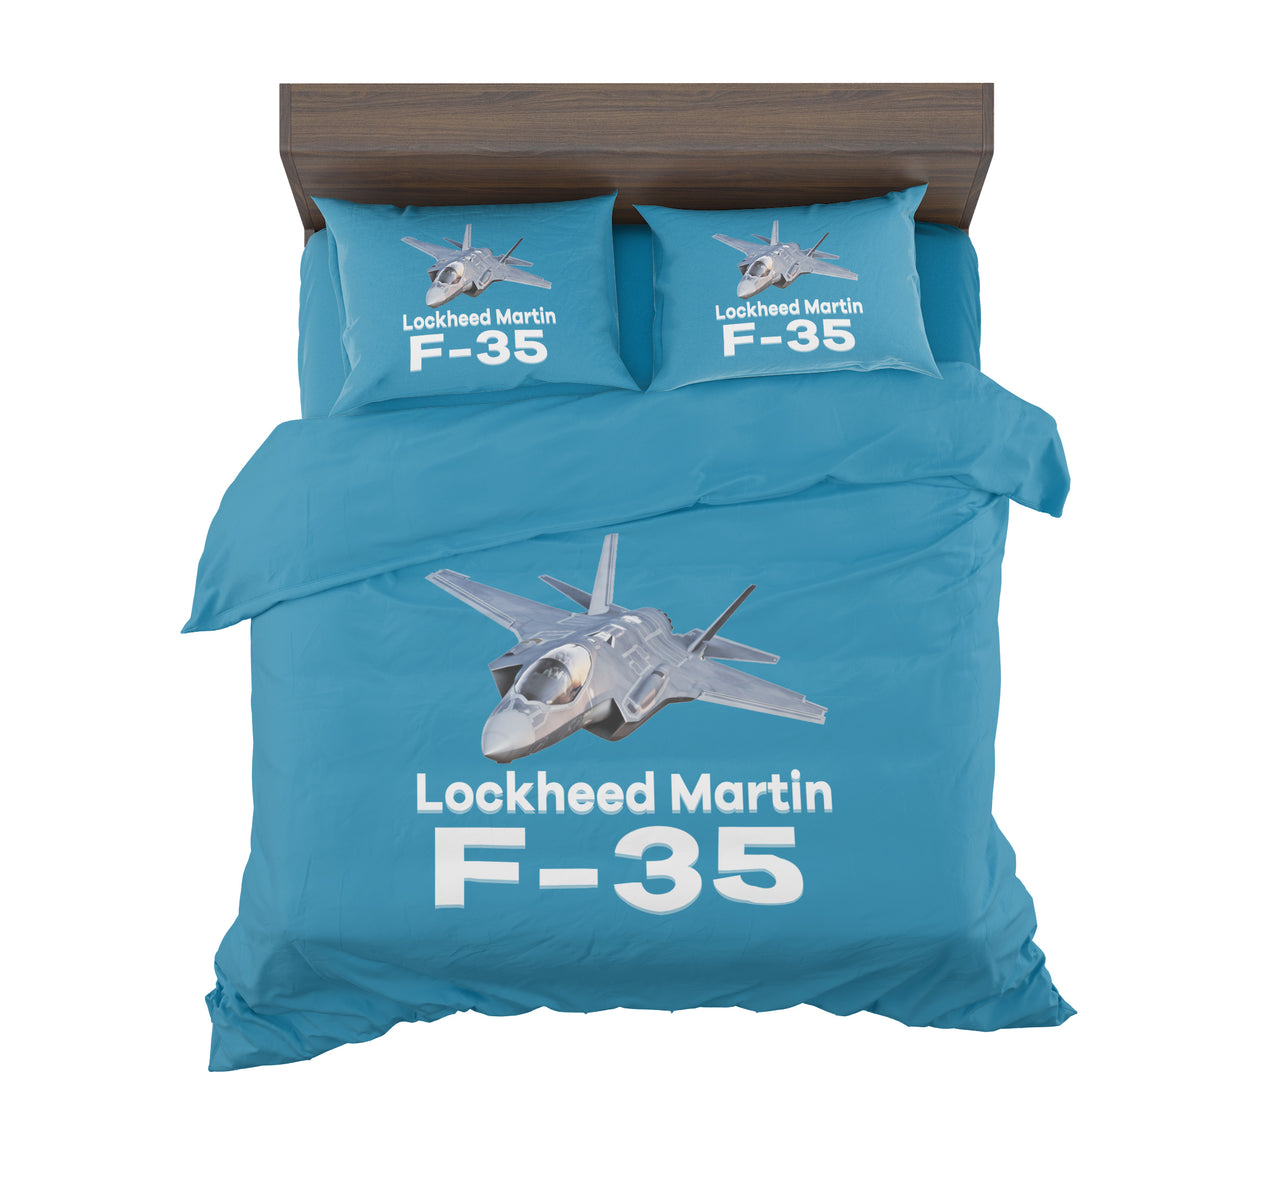 The Lockheed Martin F35 Designed Bedding Sets